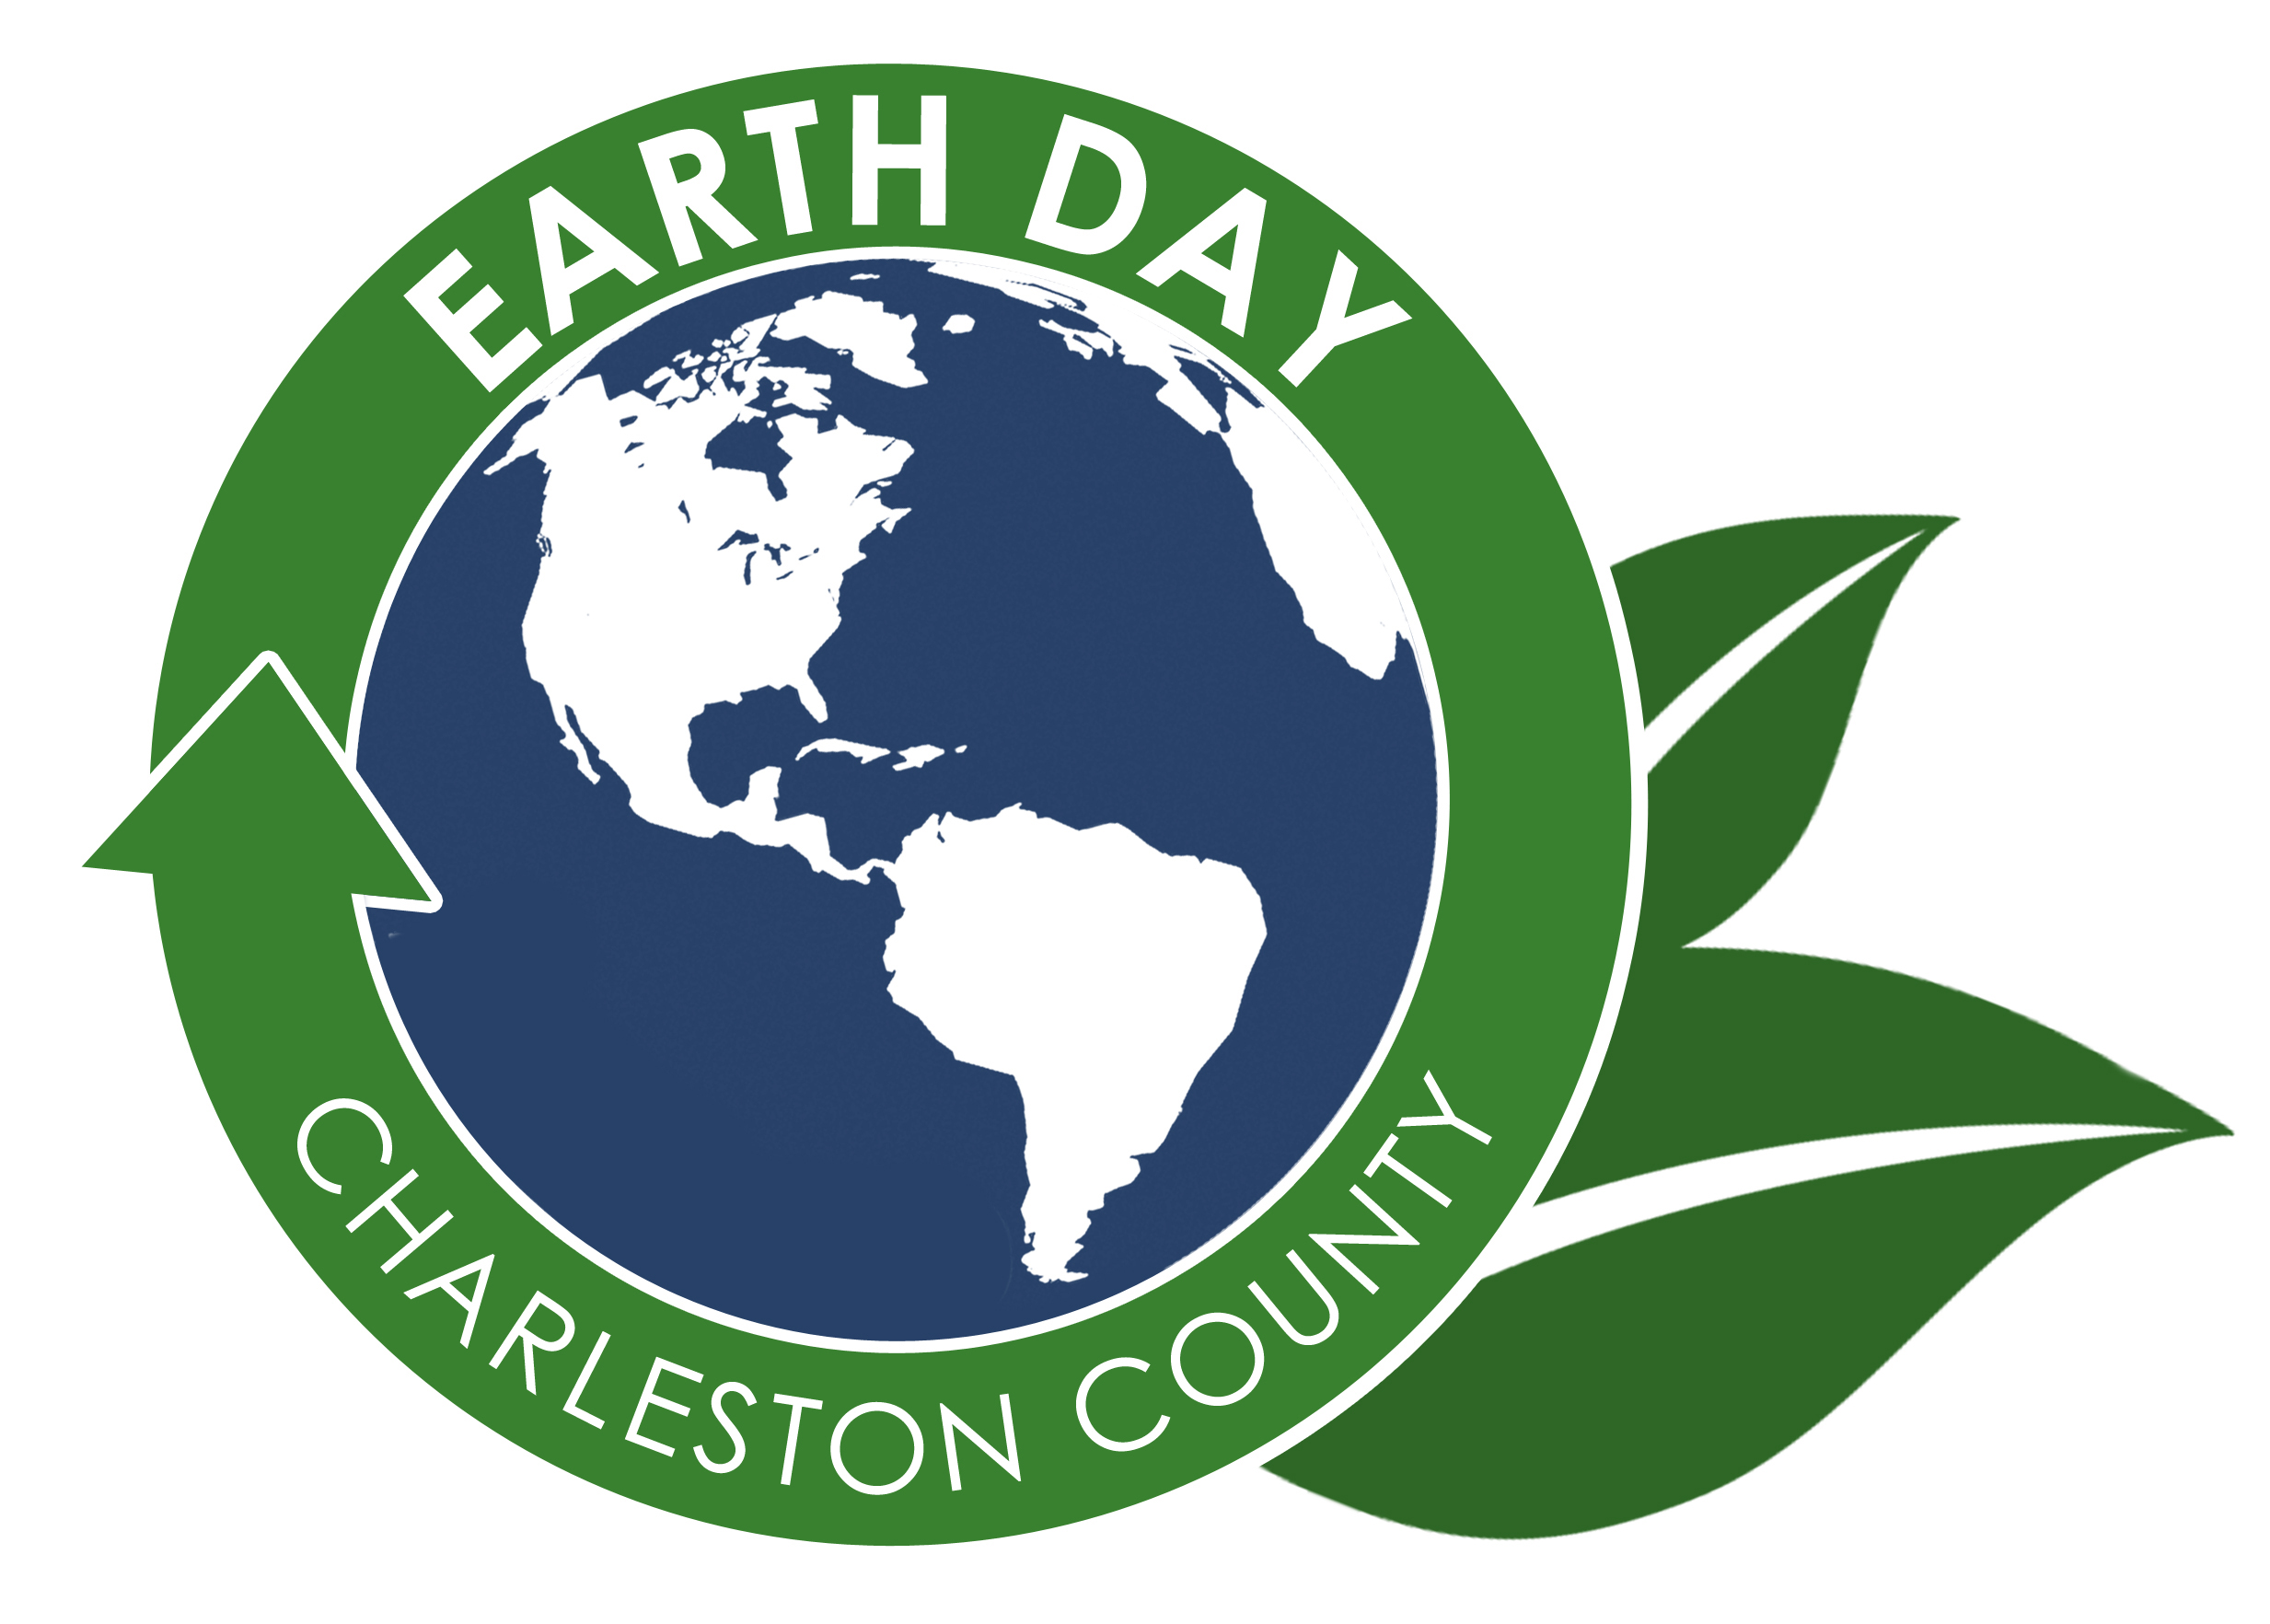 Earth Day Festival 2015 - Charleston County